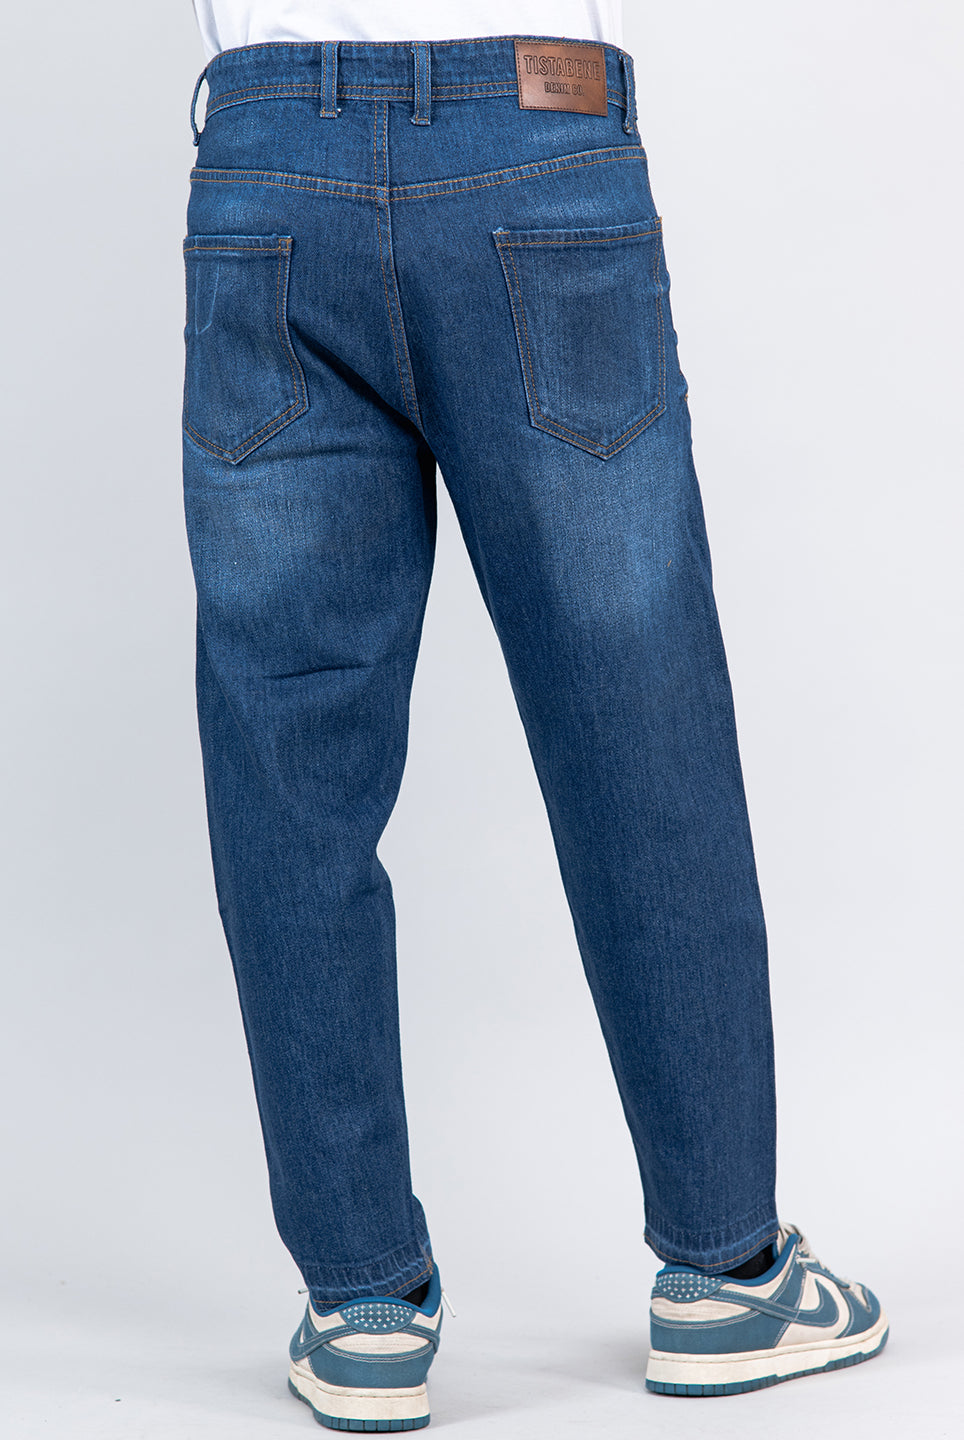 denim straight fit jeans